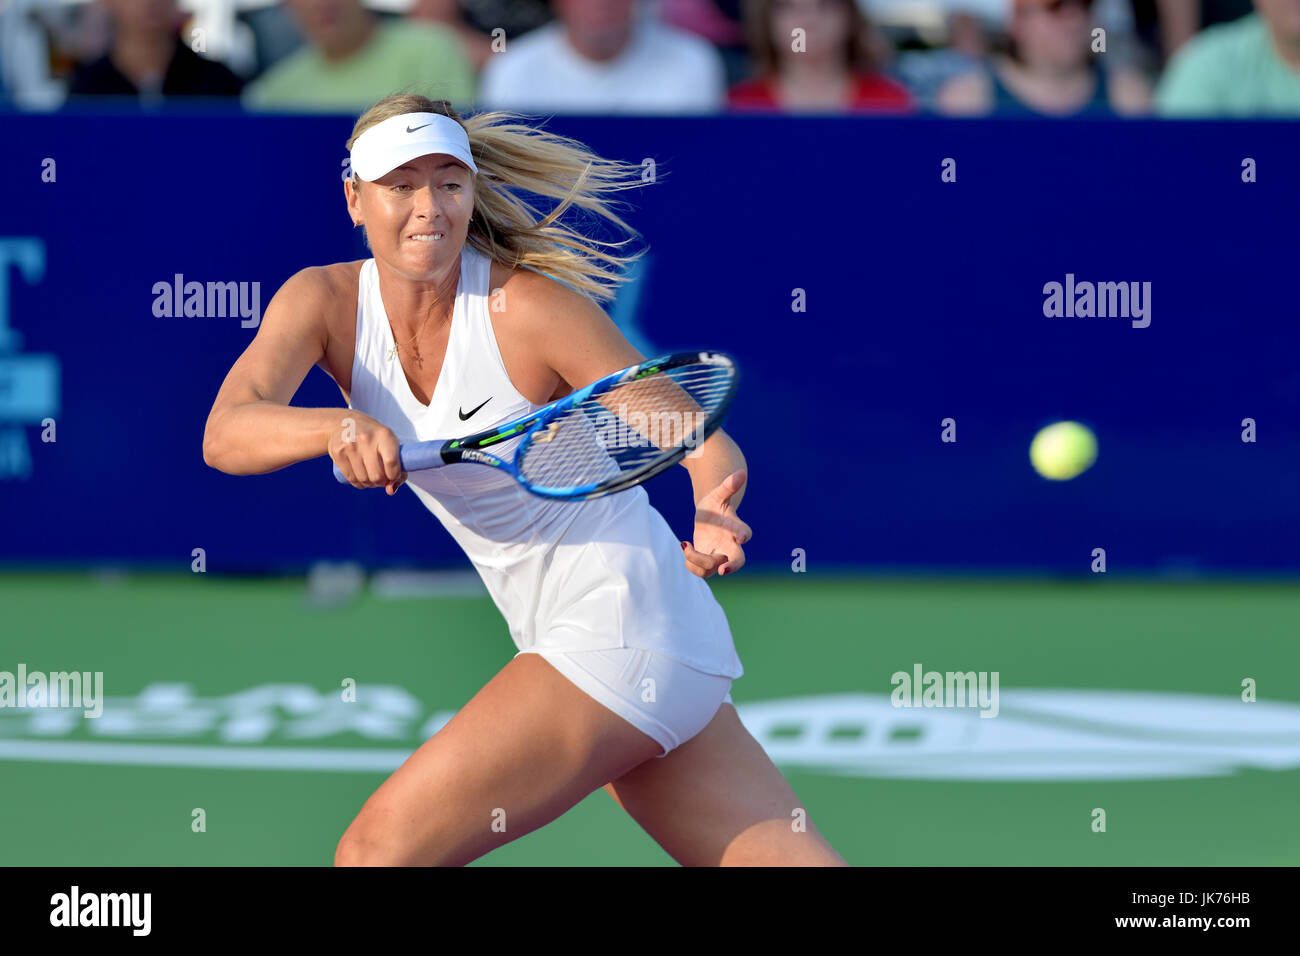 Maria Sharpova, comeback after drug ban suspension for meldonium, plays WTT tennis in San Diego, CA Stock Photo